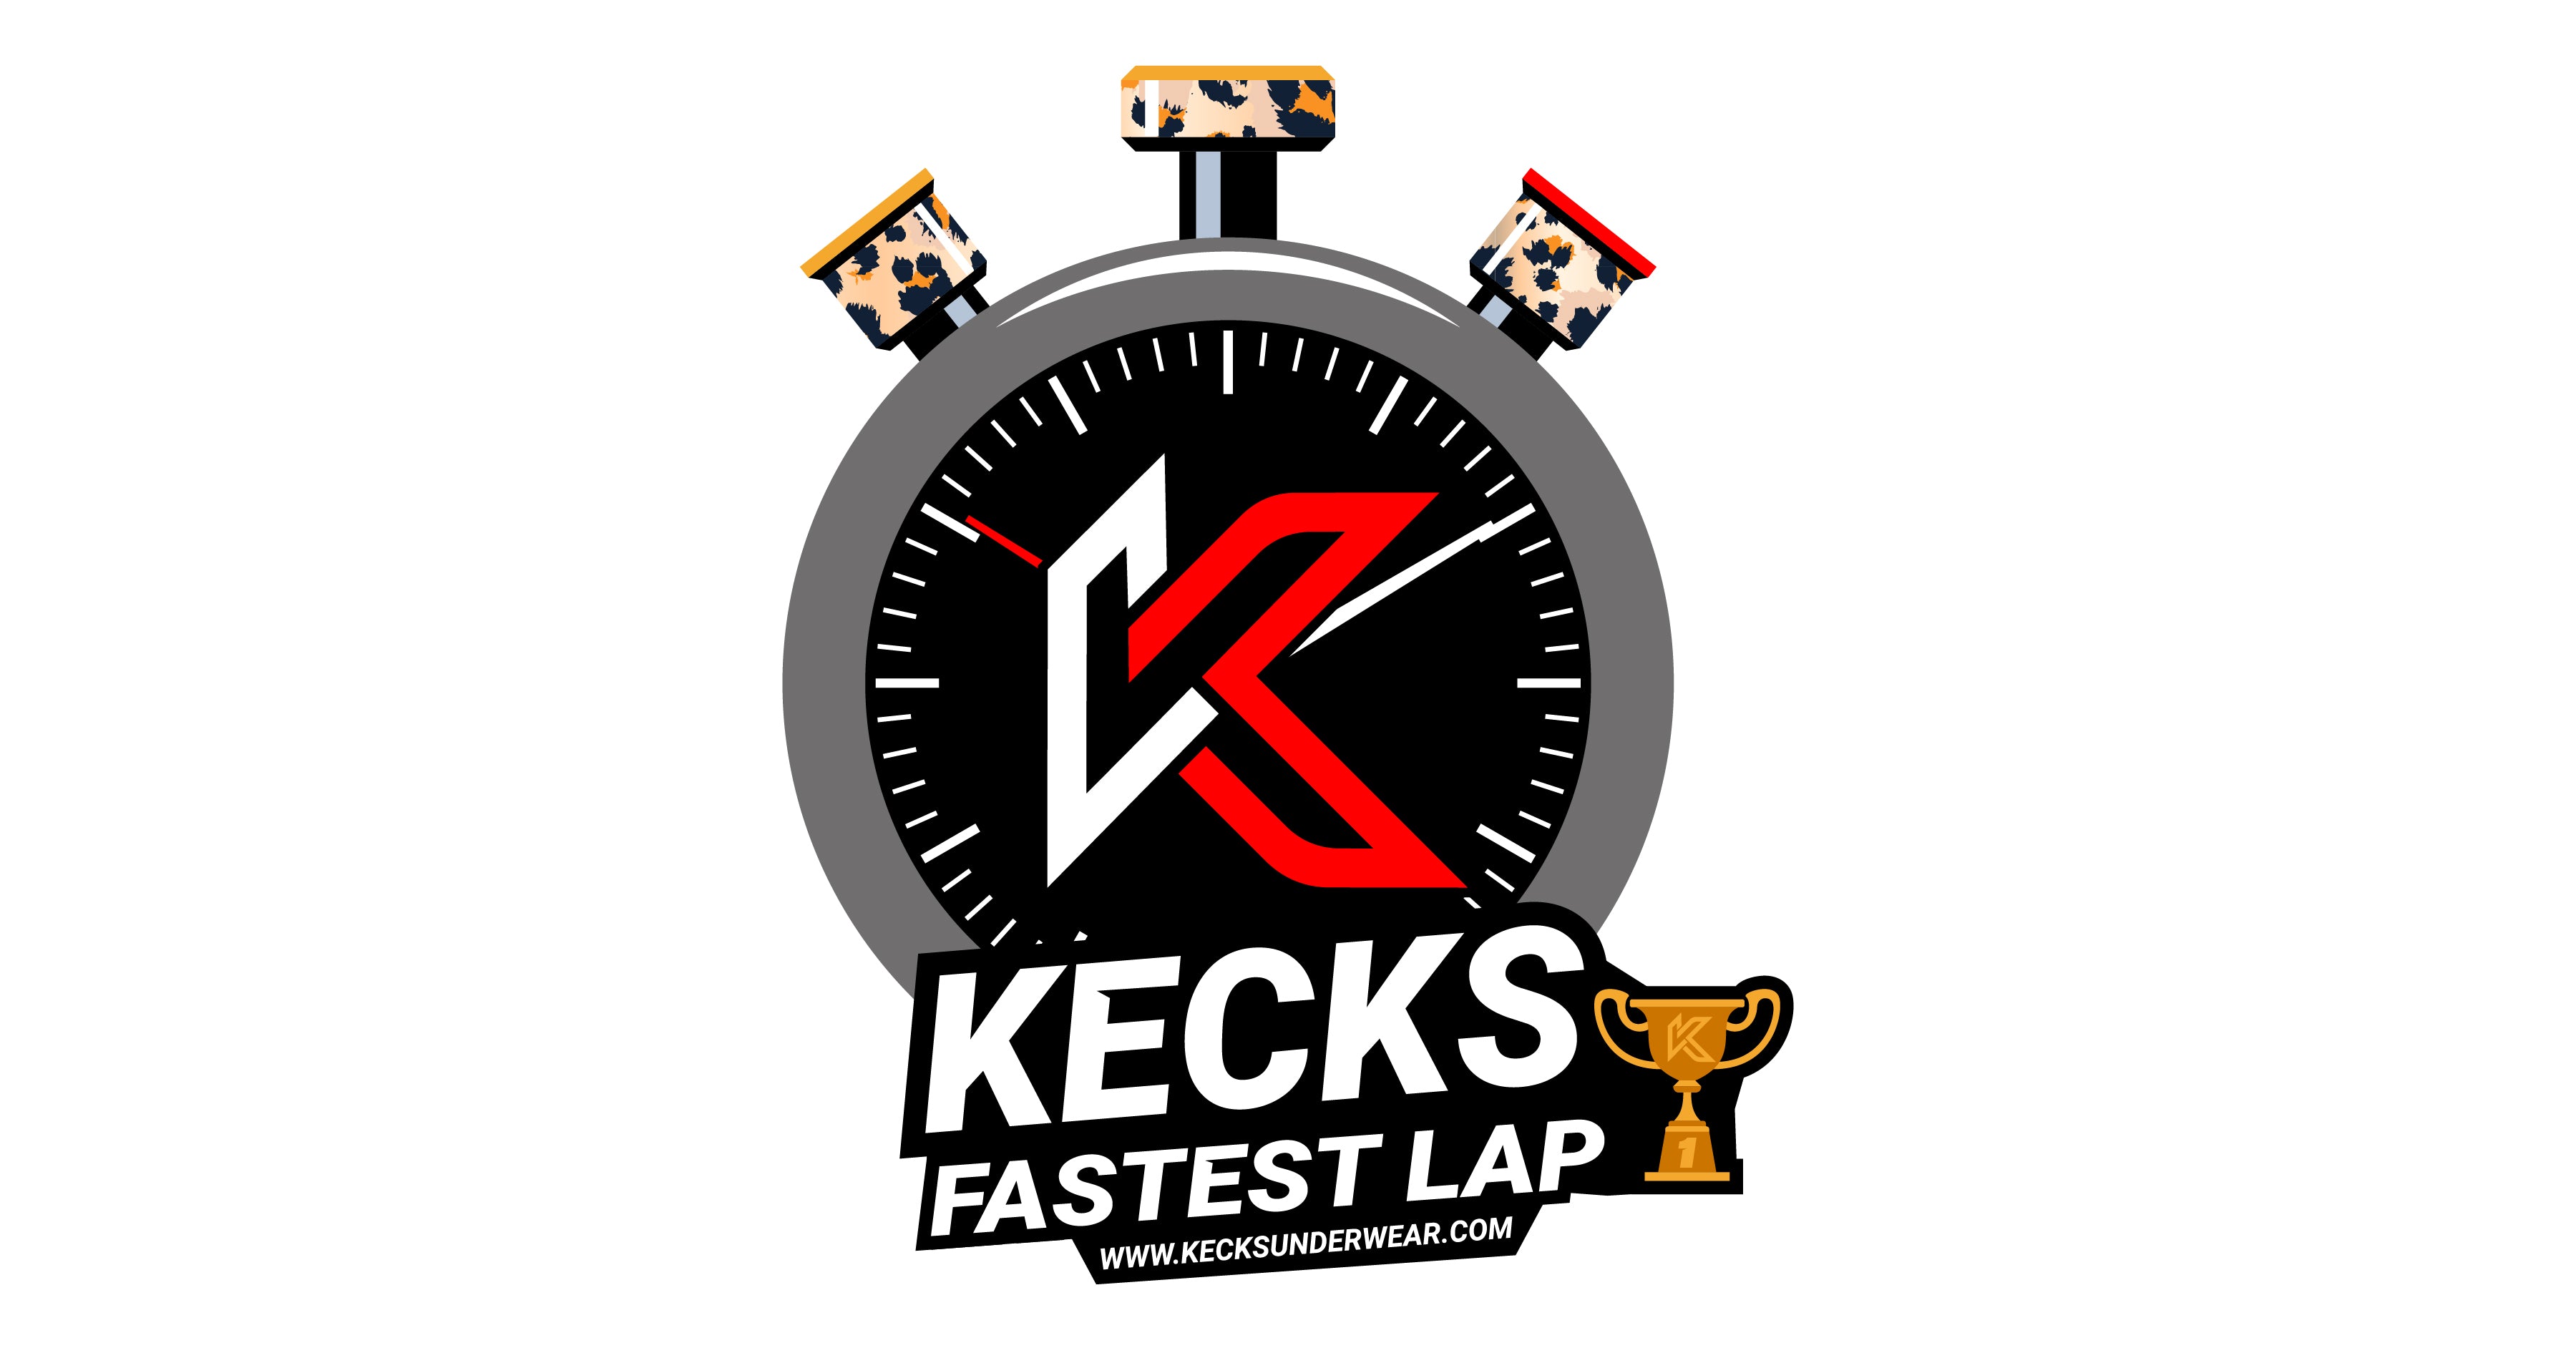 Kecks Fastest Lap Award